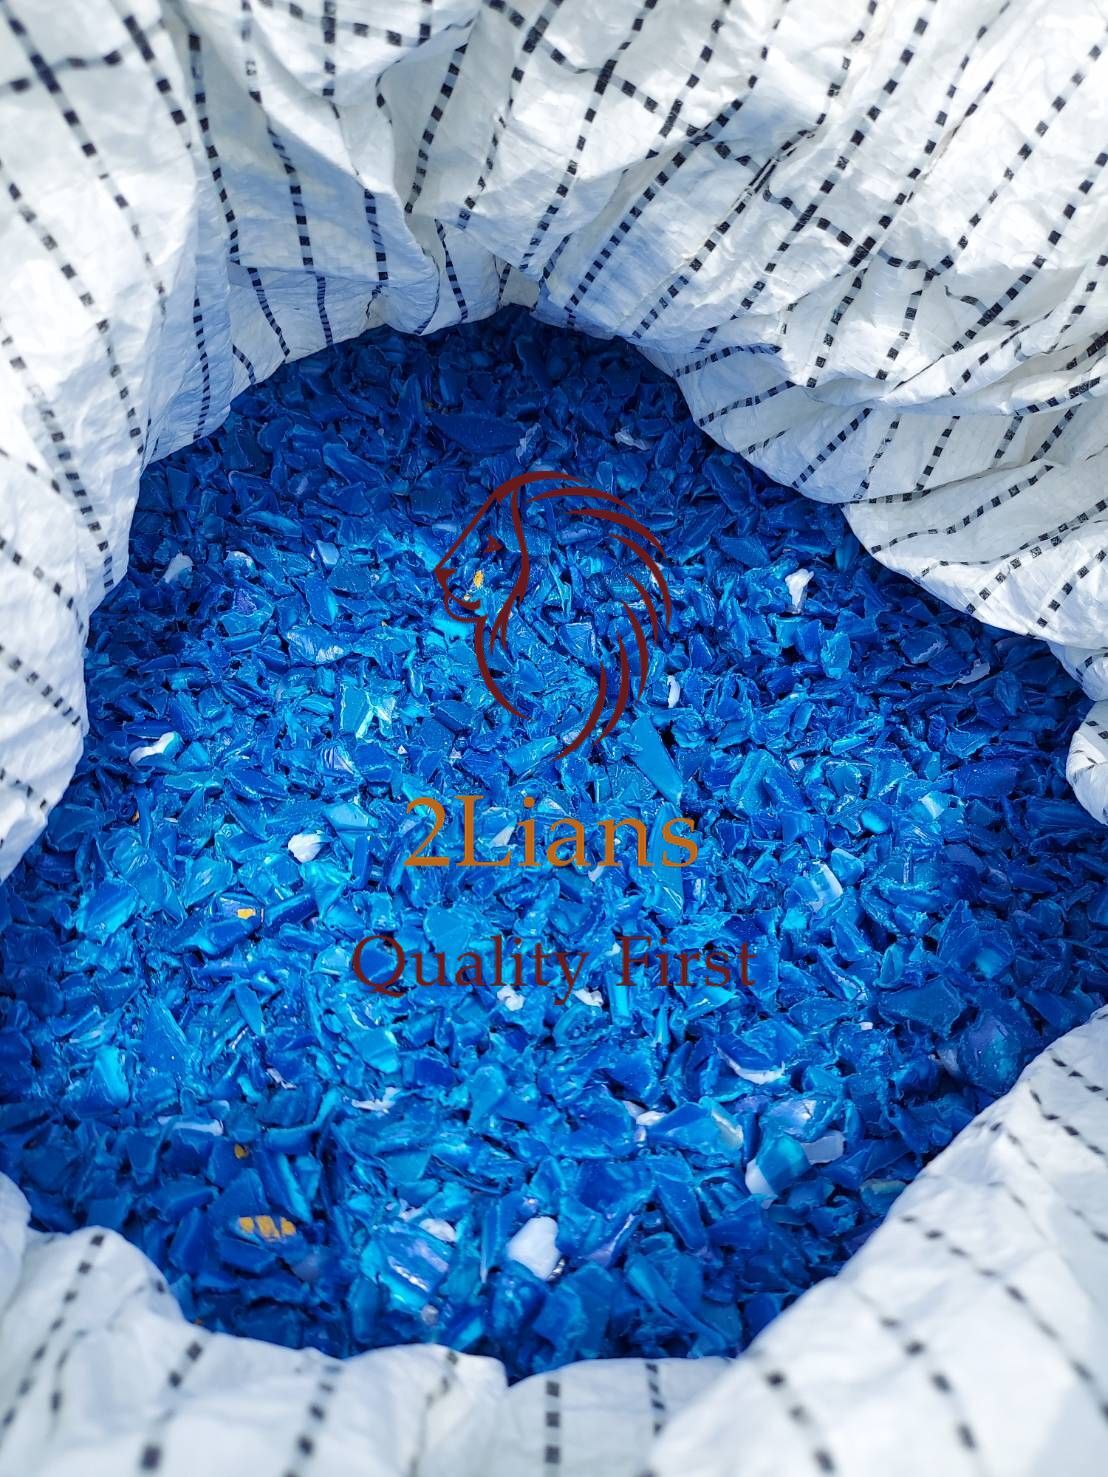 HDPE Drum Regrind Blue Color - Japan origin